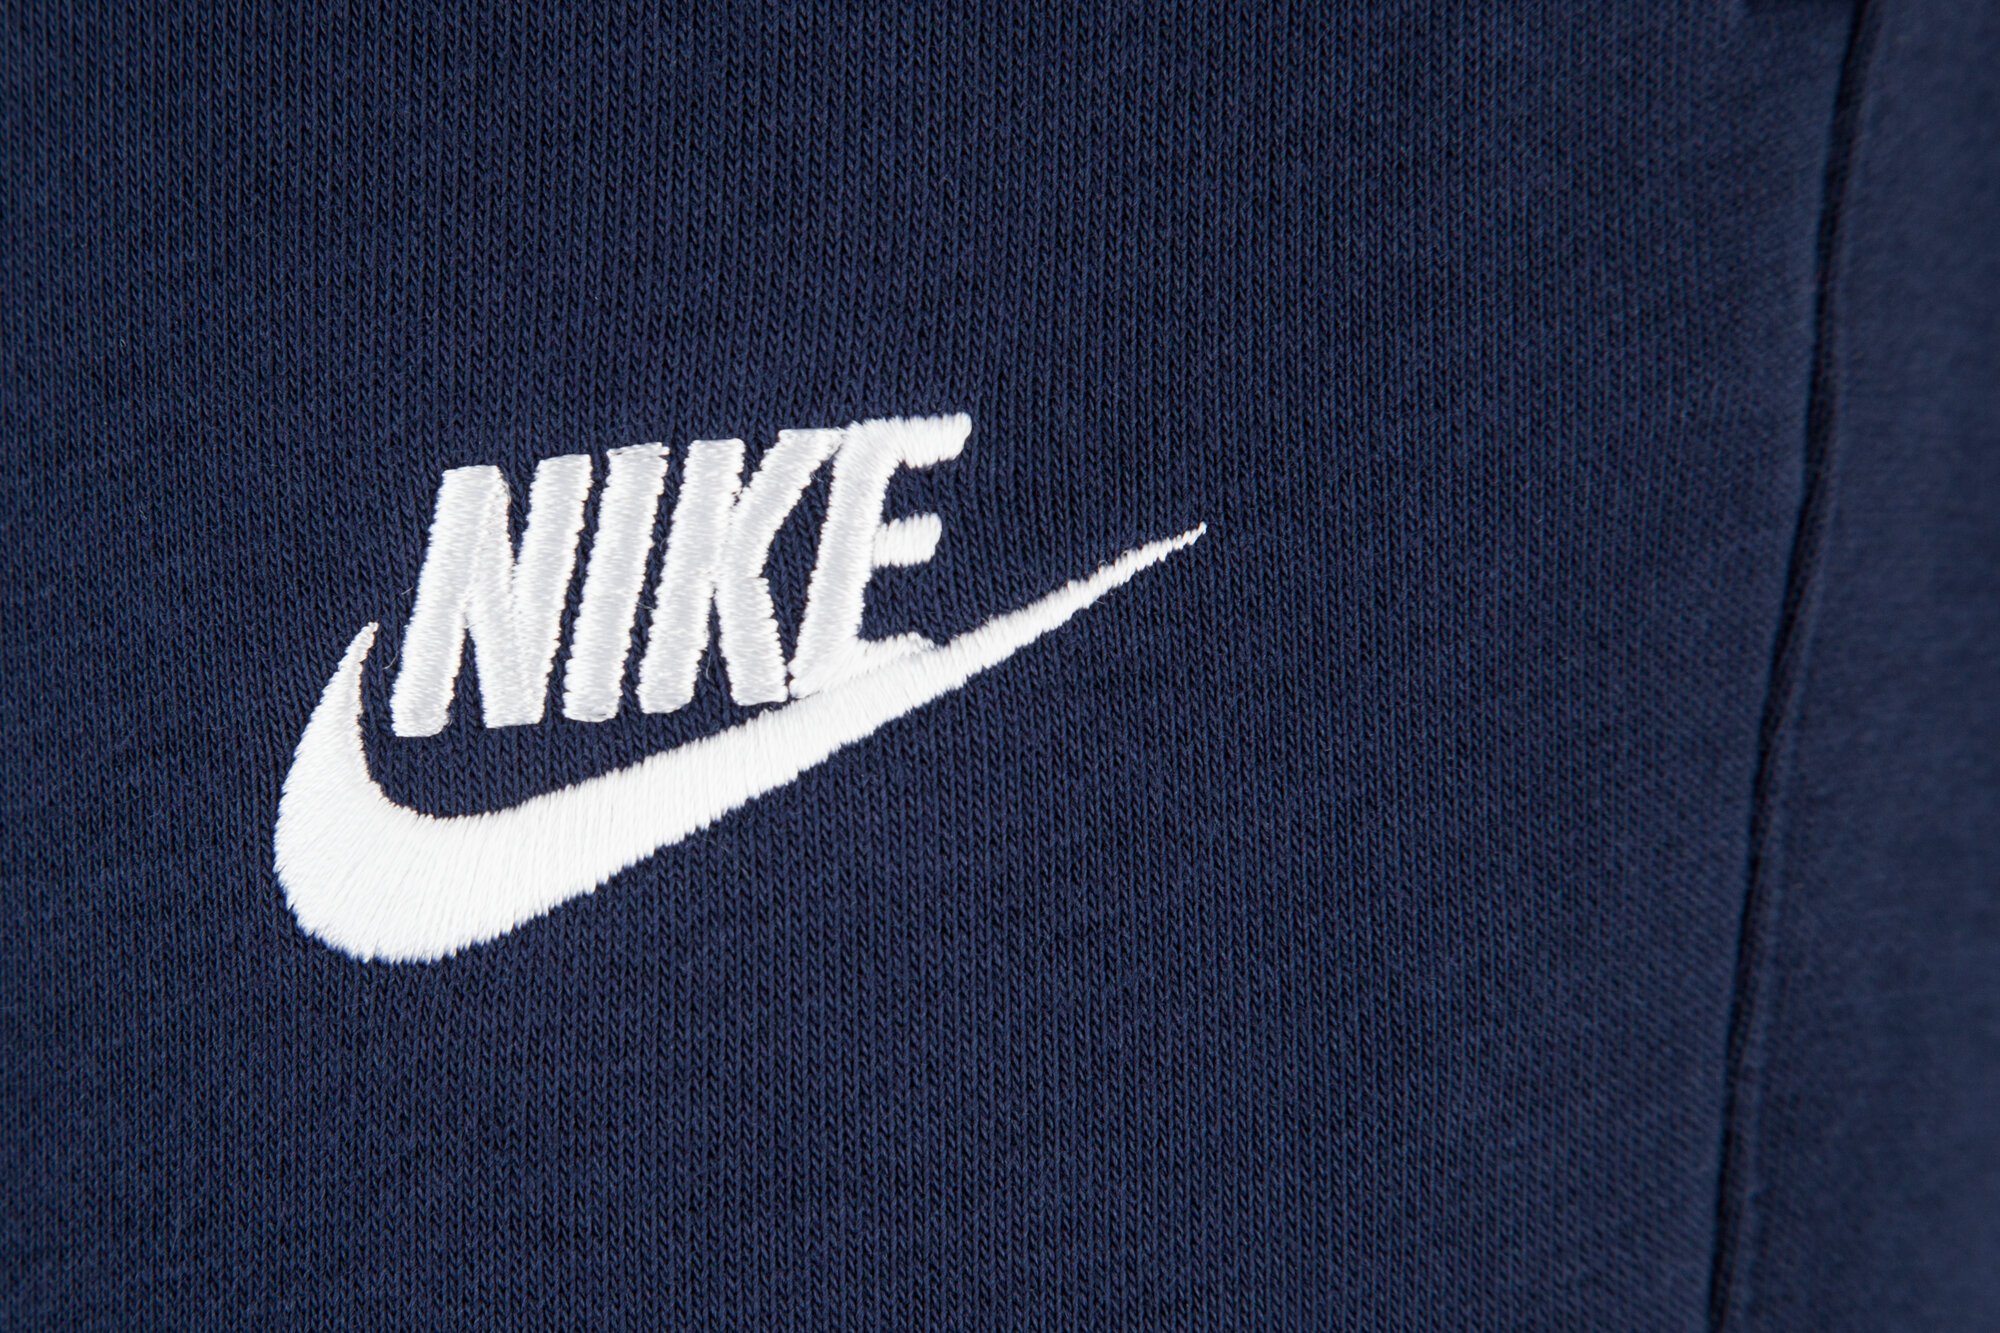 Ткань найка. Nike brand. Надпись найк. Nike бренды одежды. Значок фирмы найк.